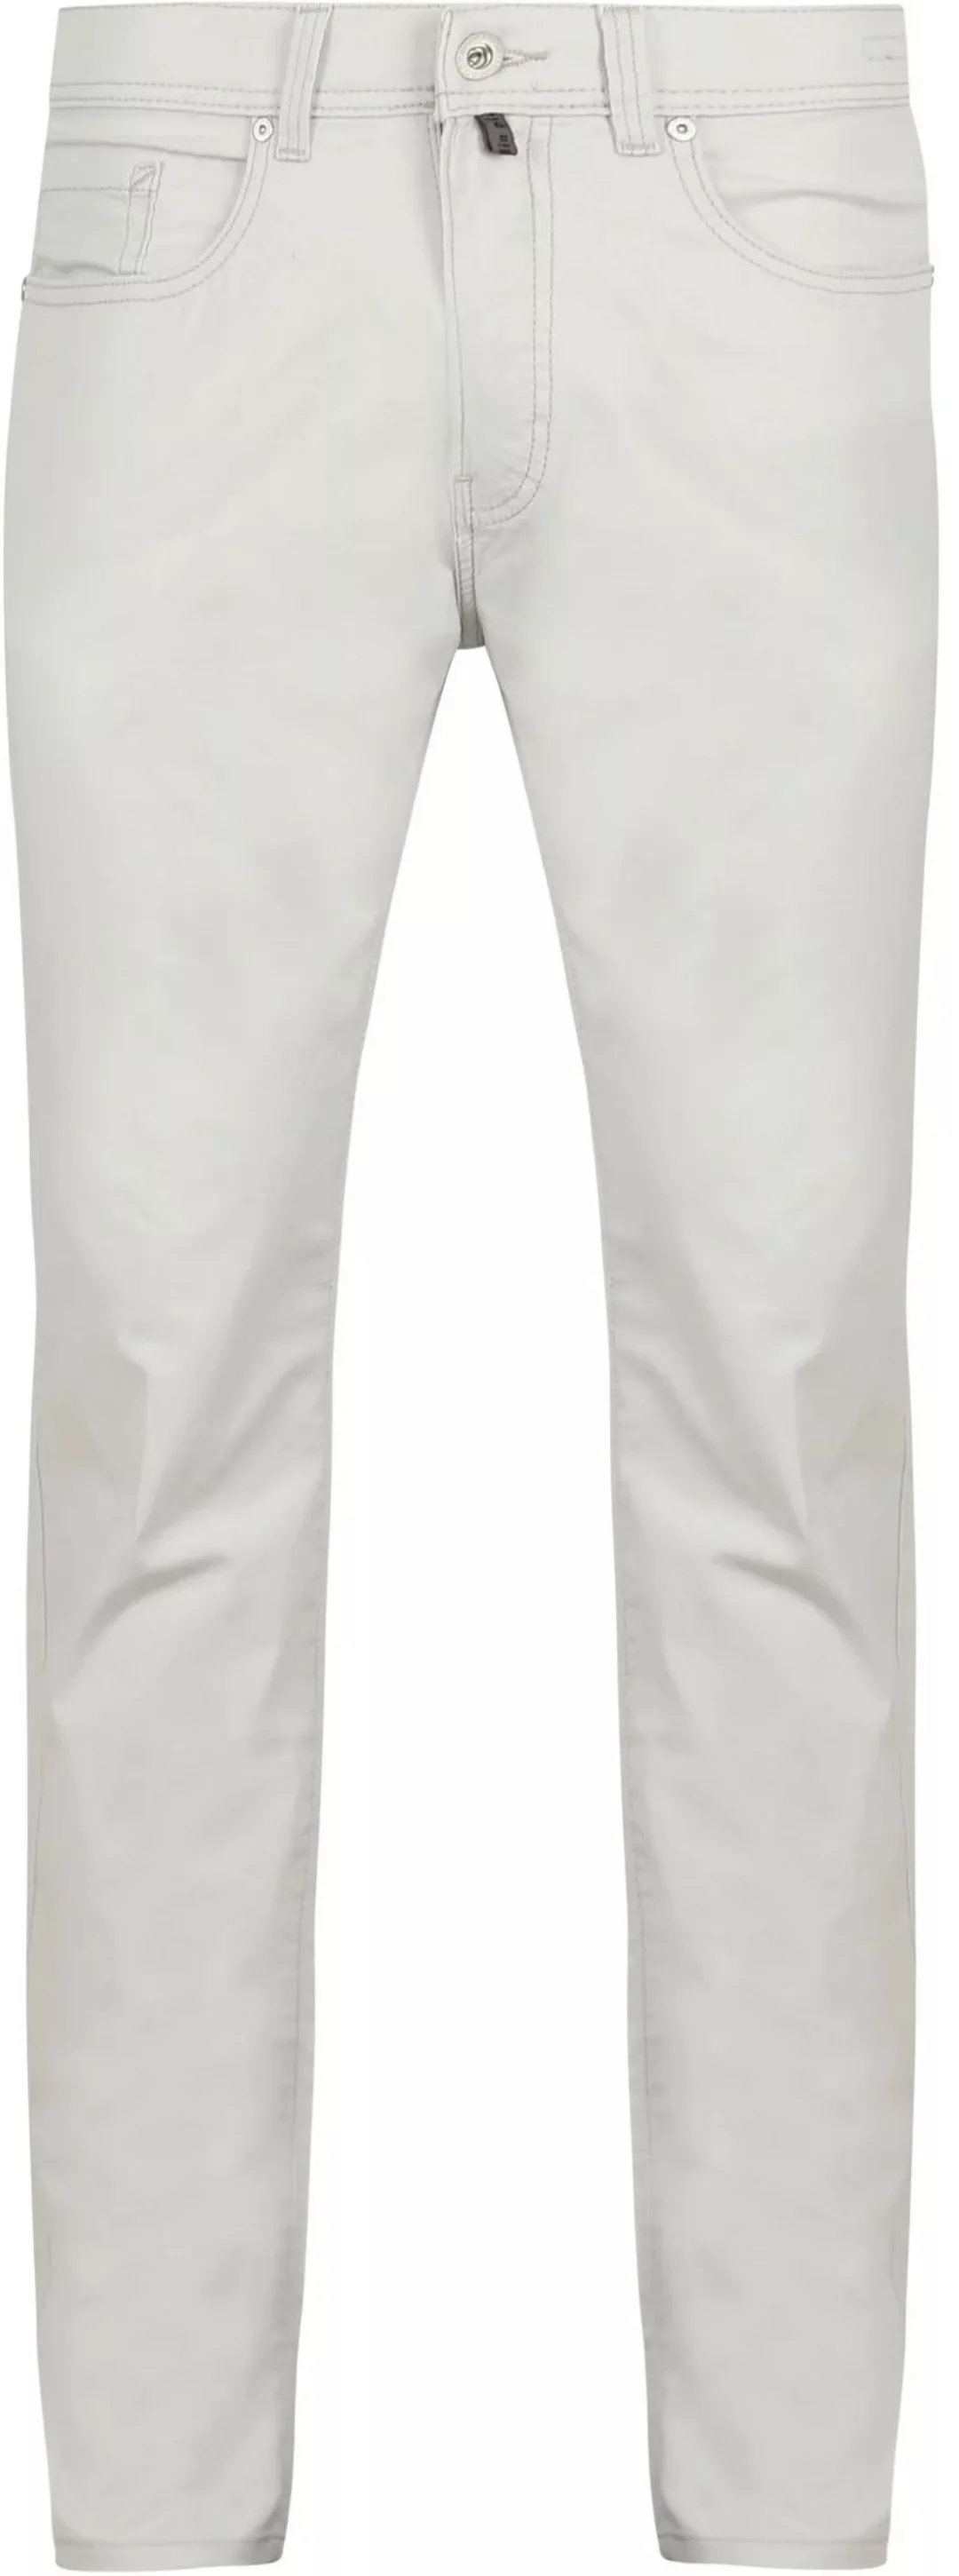 Pierre Cardin Trousers Lyon Tapered Hellgrau - Größe W 31 - L 32 günstig online kaufen